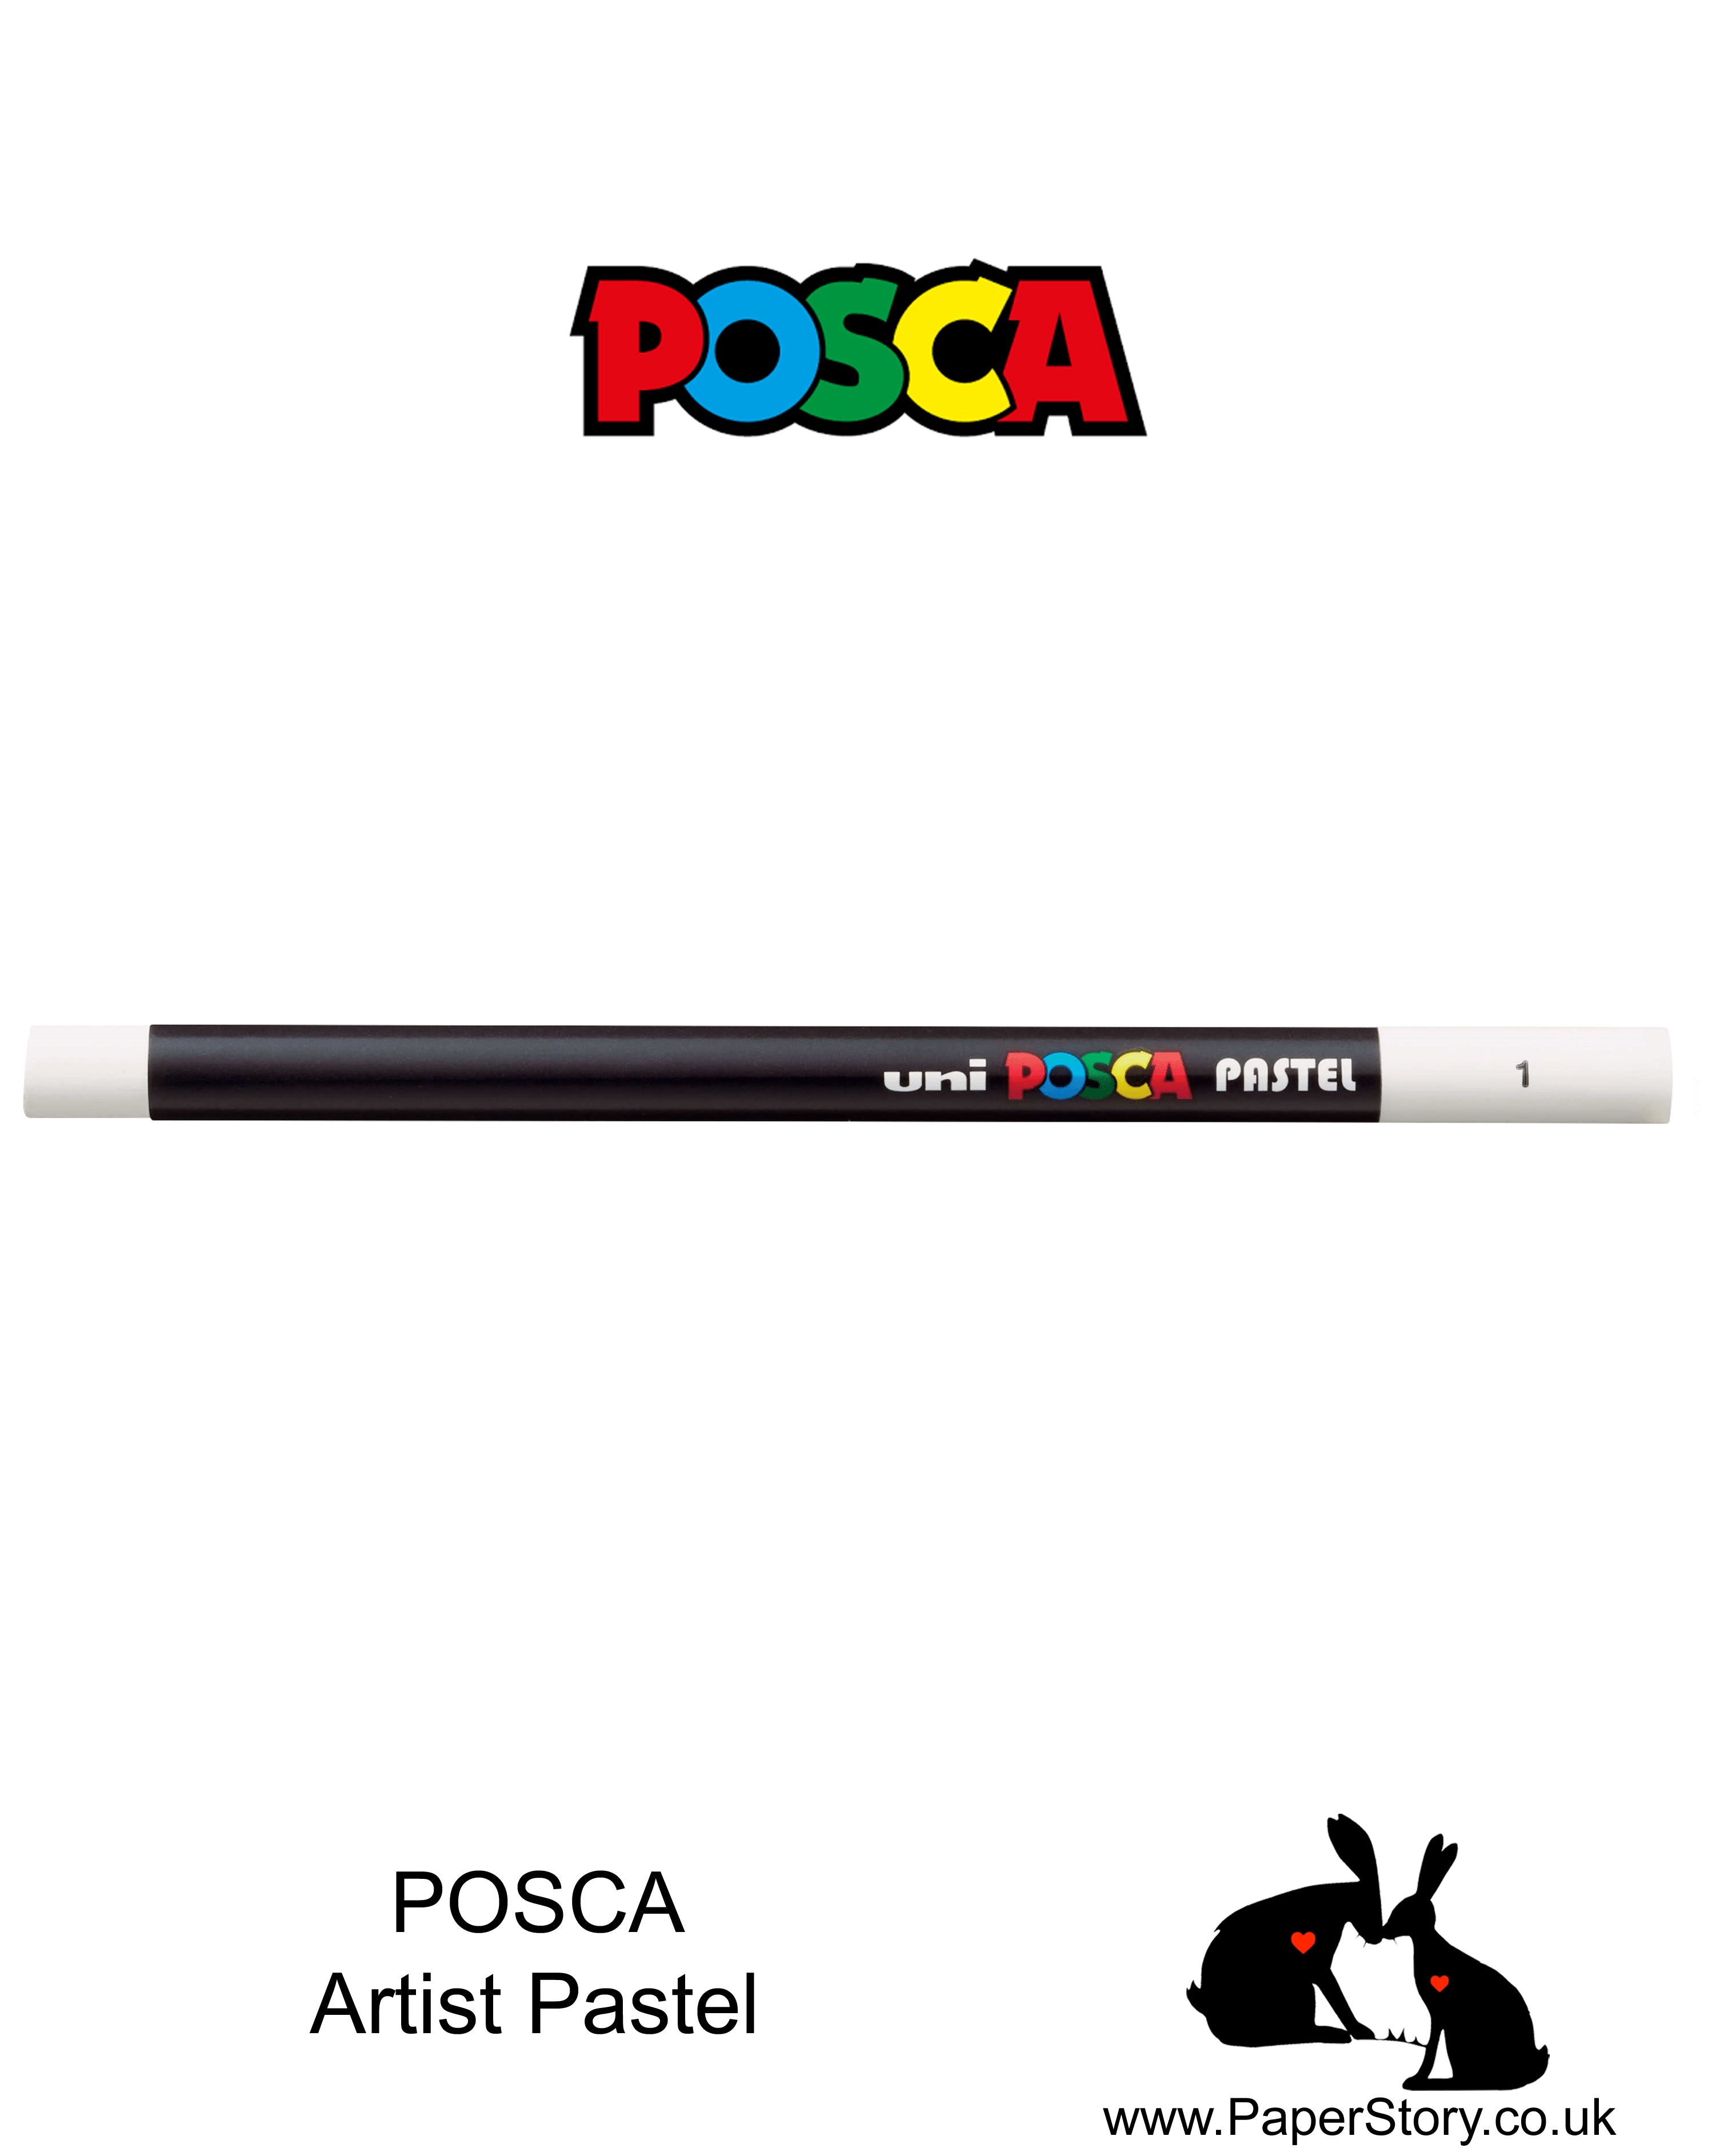 Uni Posca Wax Oil Pastel Packs Range Vibrant Smooth Finish Blendable Artist  Gift Sets 